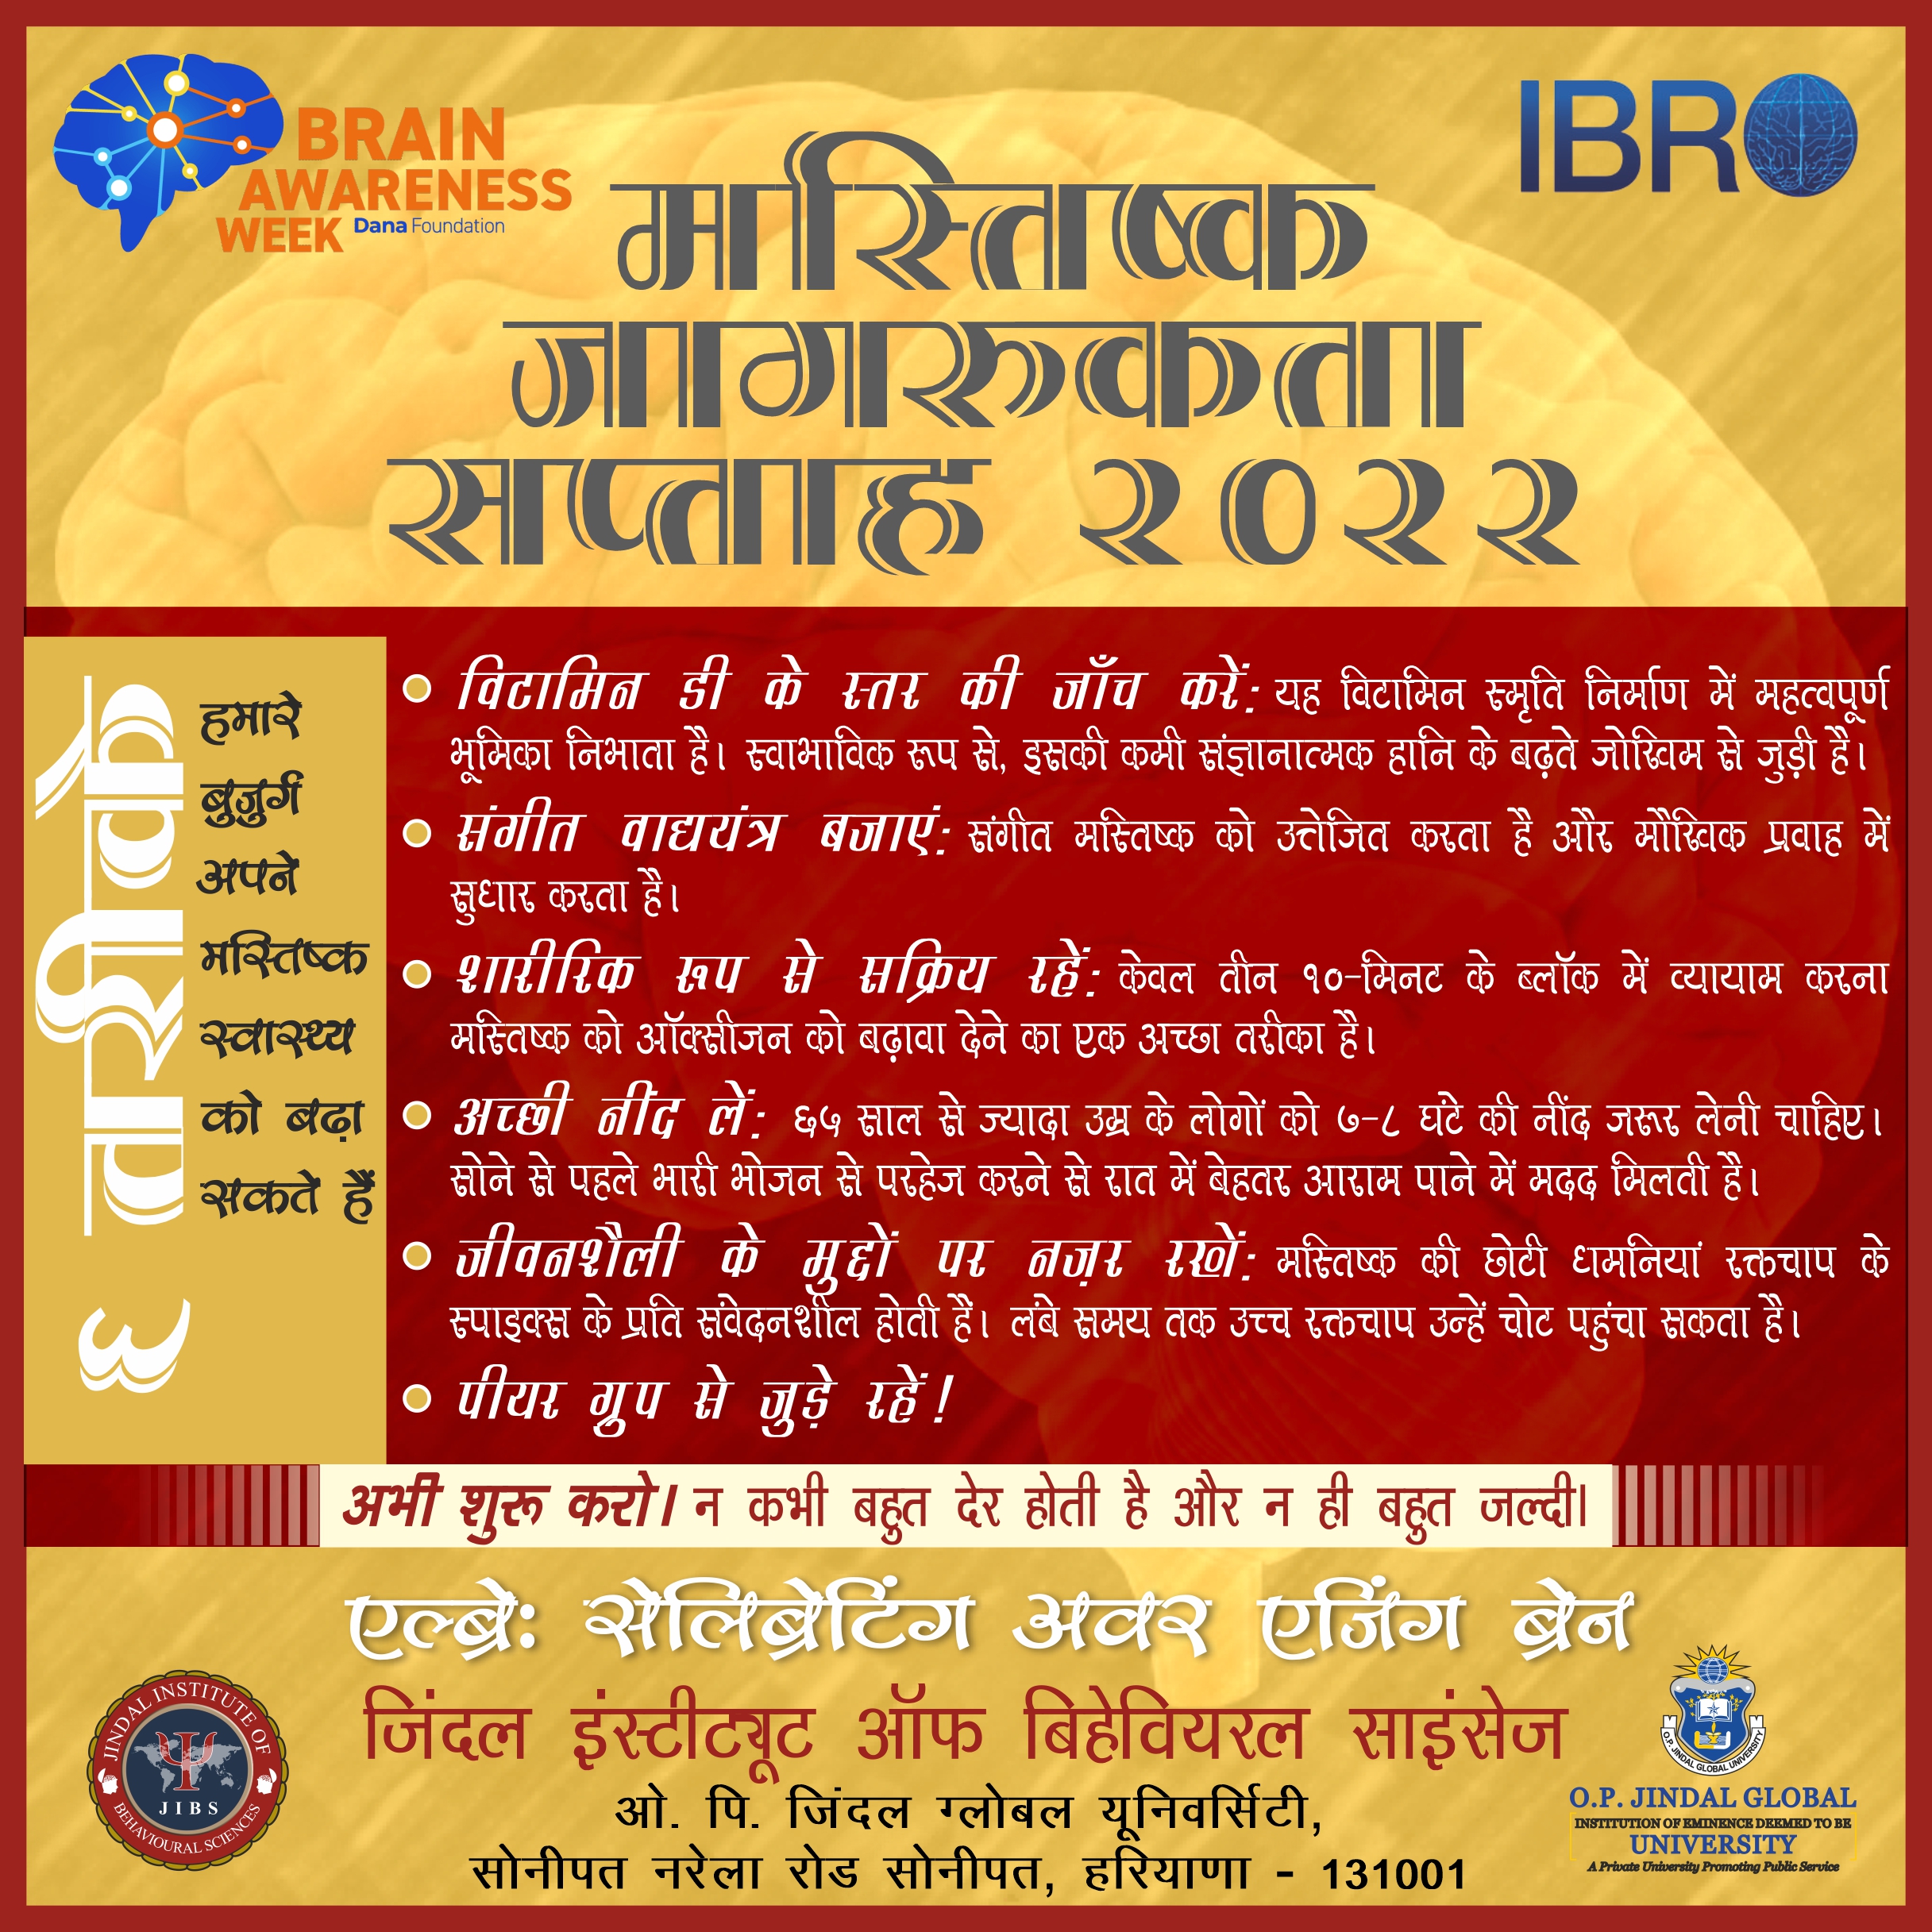 Poster 2 - Brain Awareness Week 2022 (Hindi)